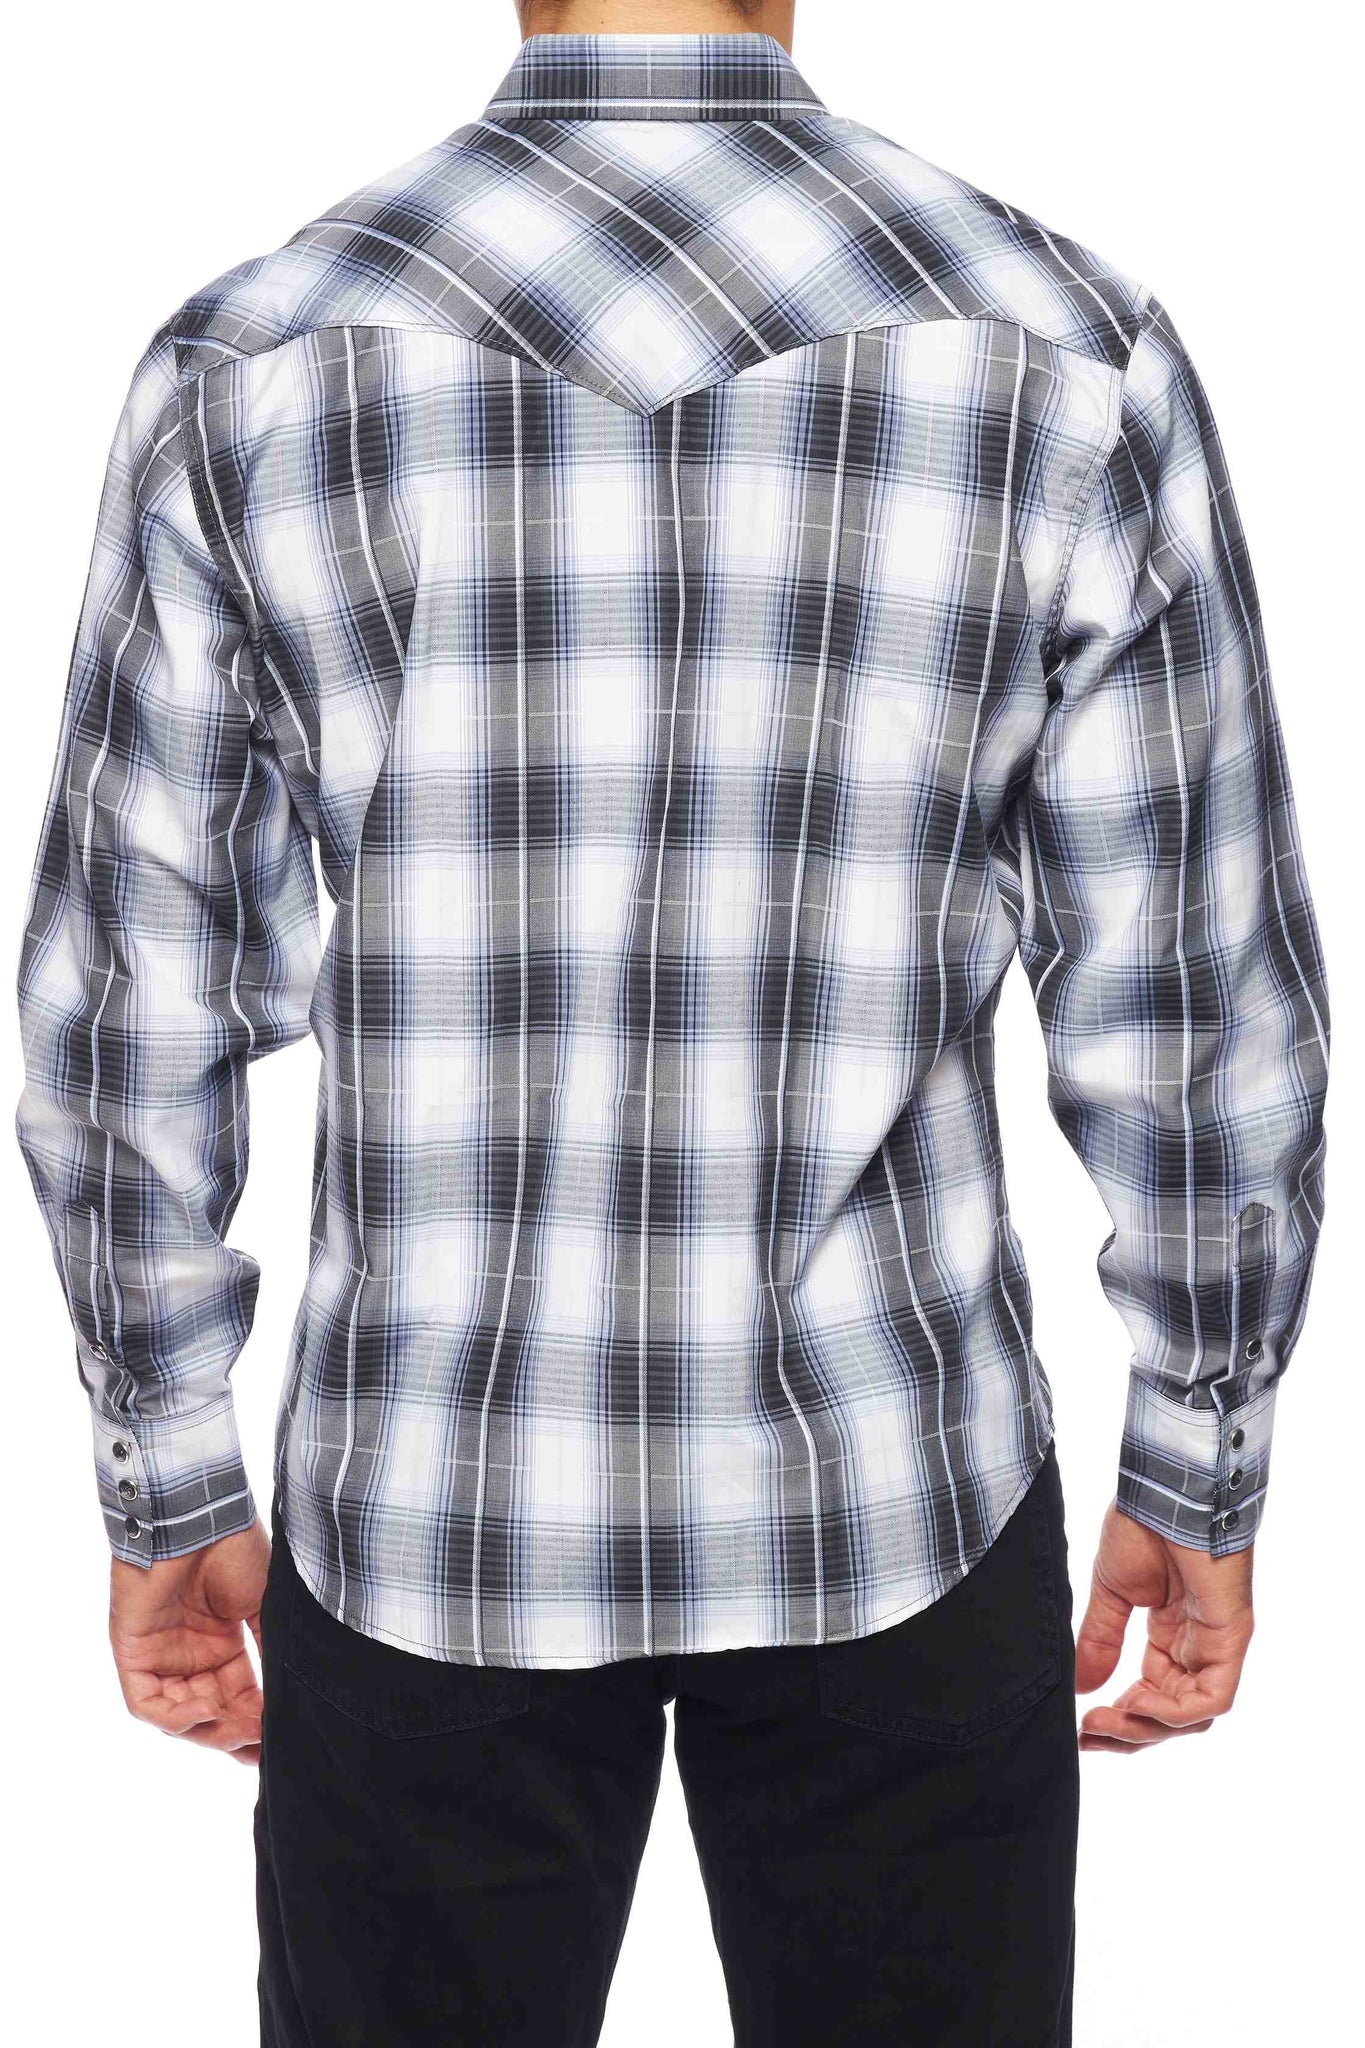 Men's Western Long Sleeve Pearl Snap Plaid Shirt -PS400-486